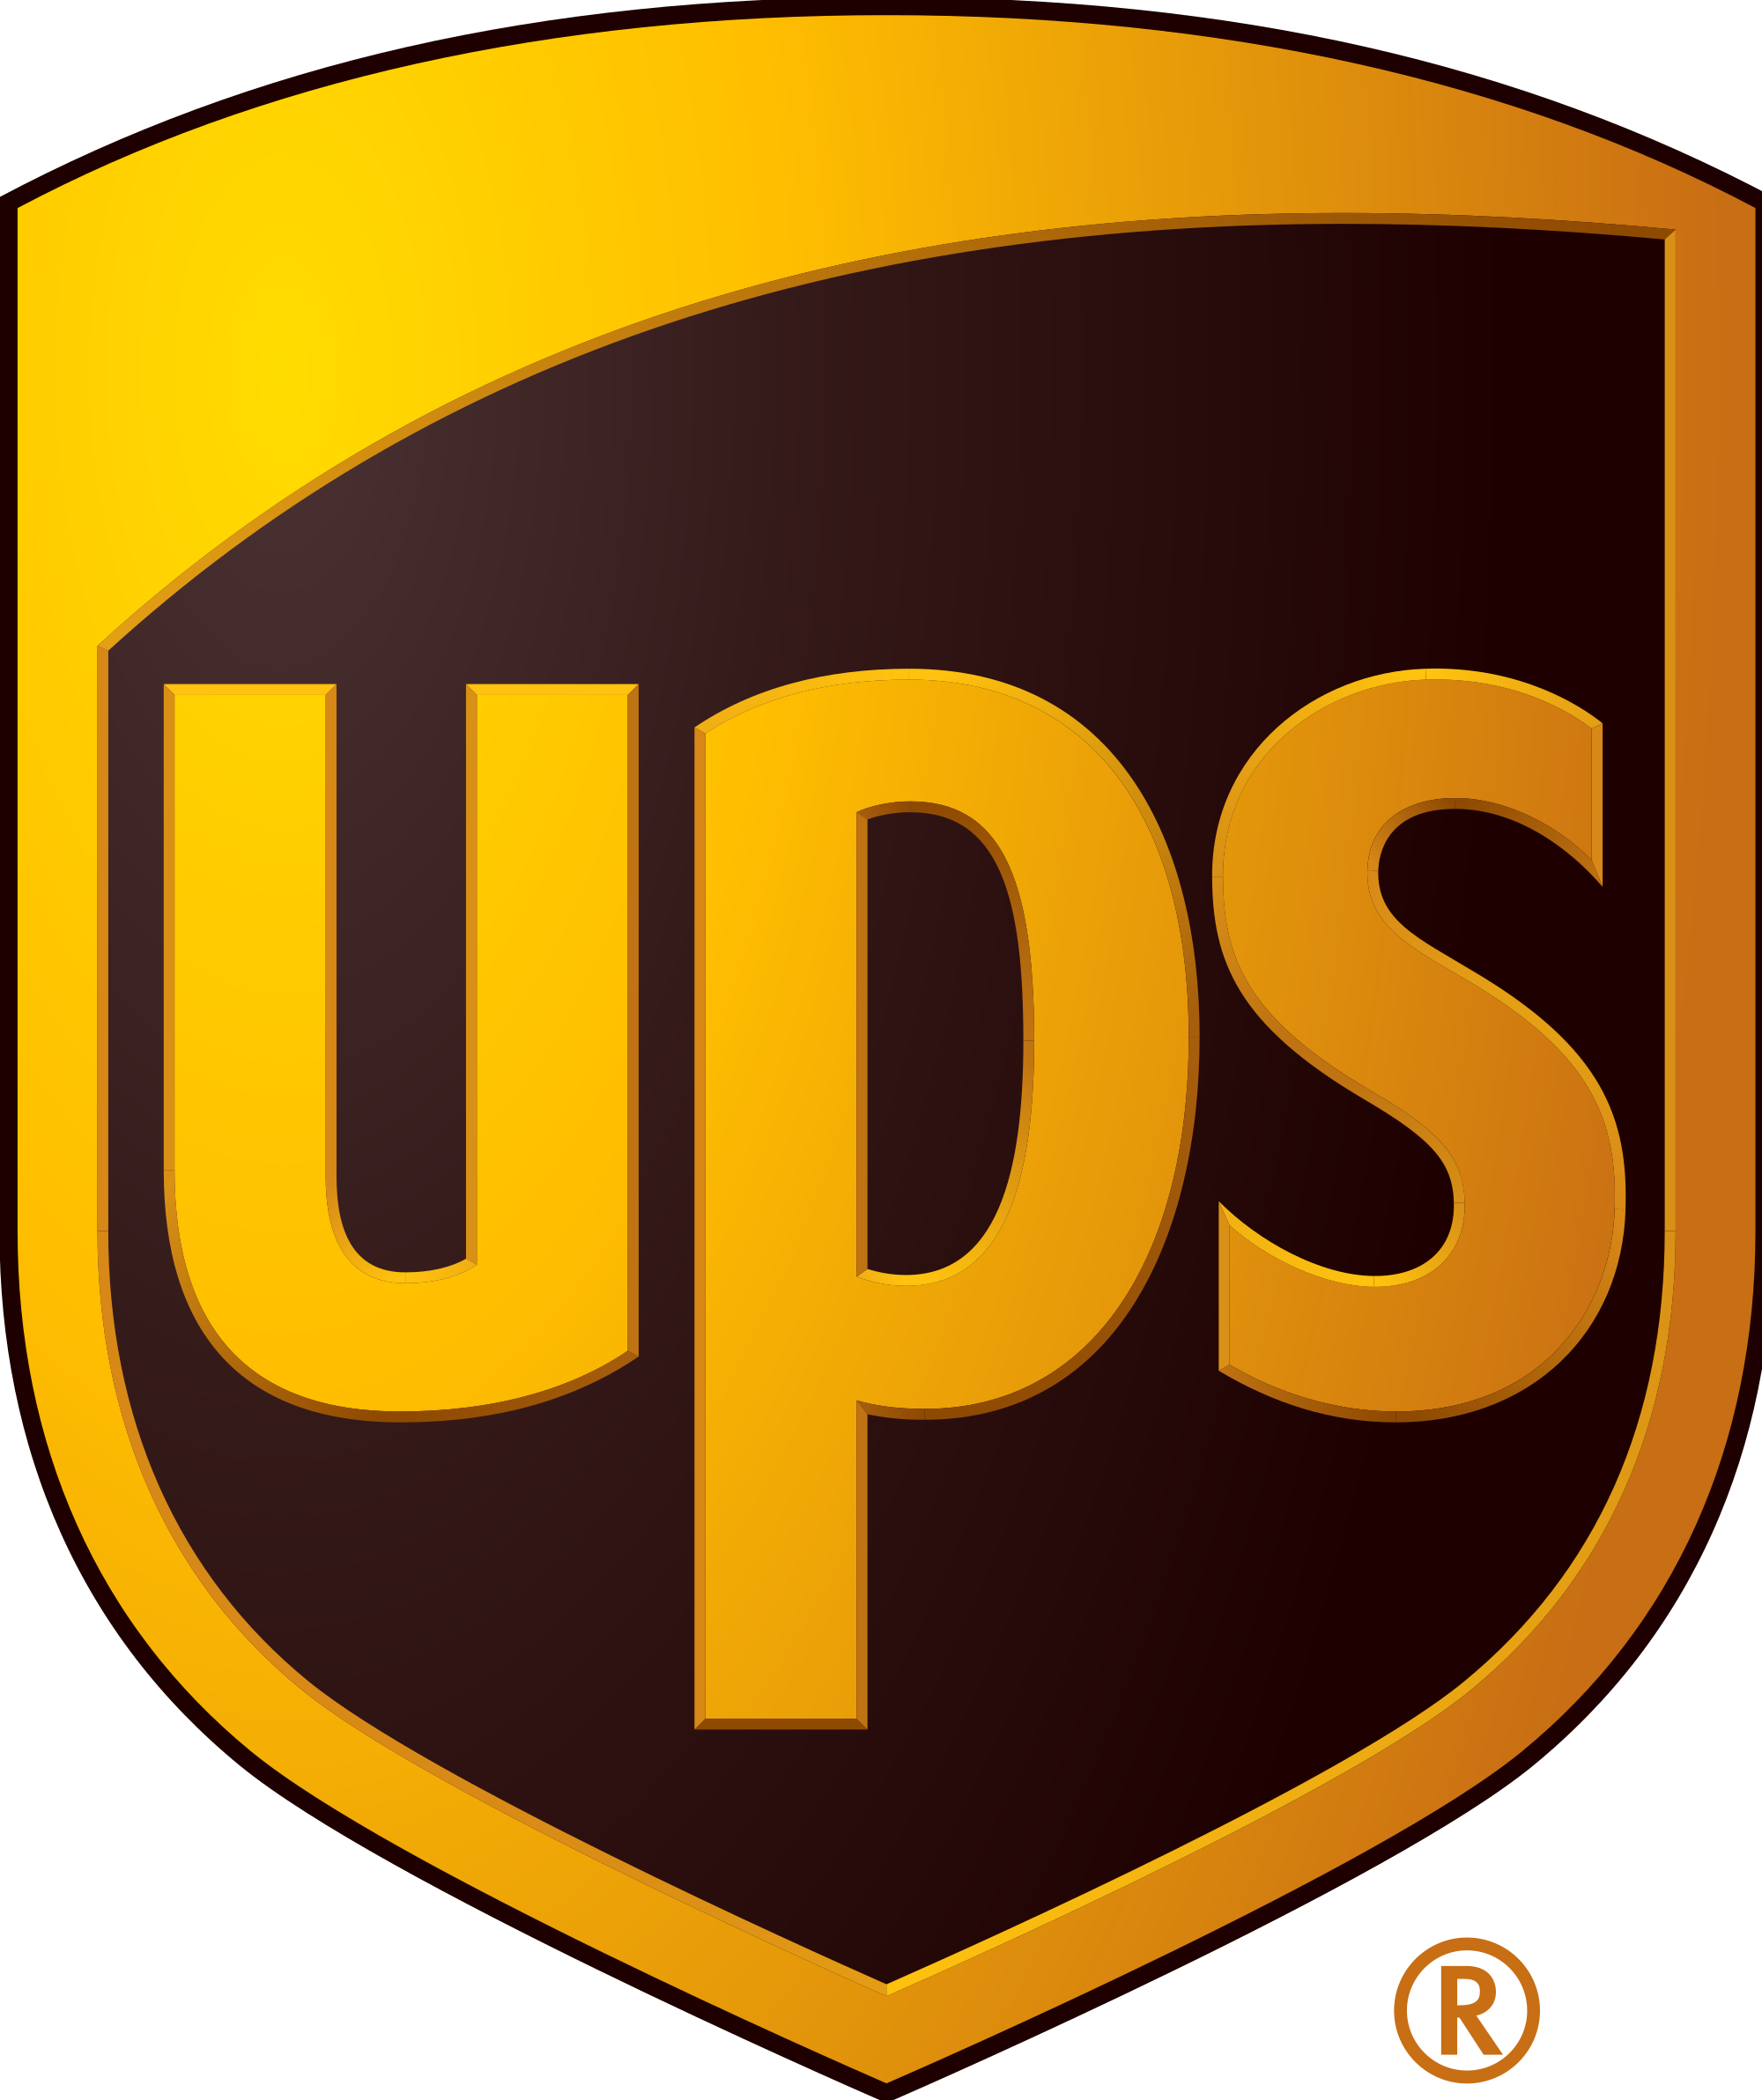 2000px-ups-logo-shield-2017.svg.png